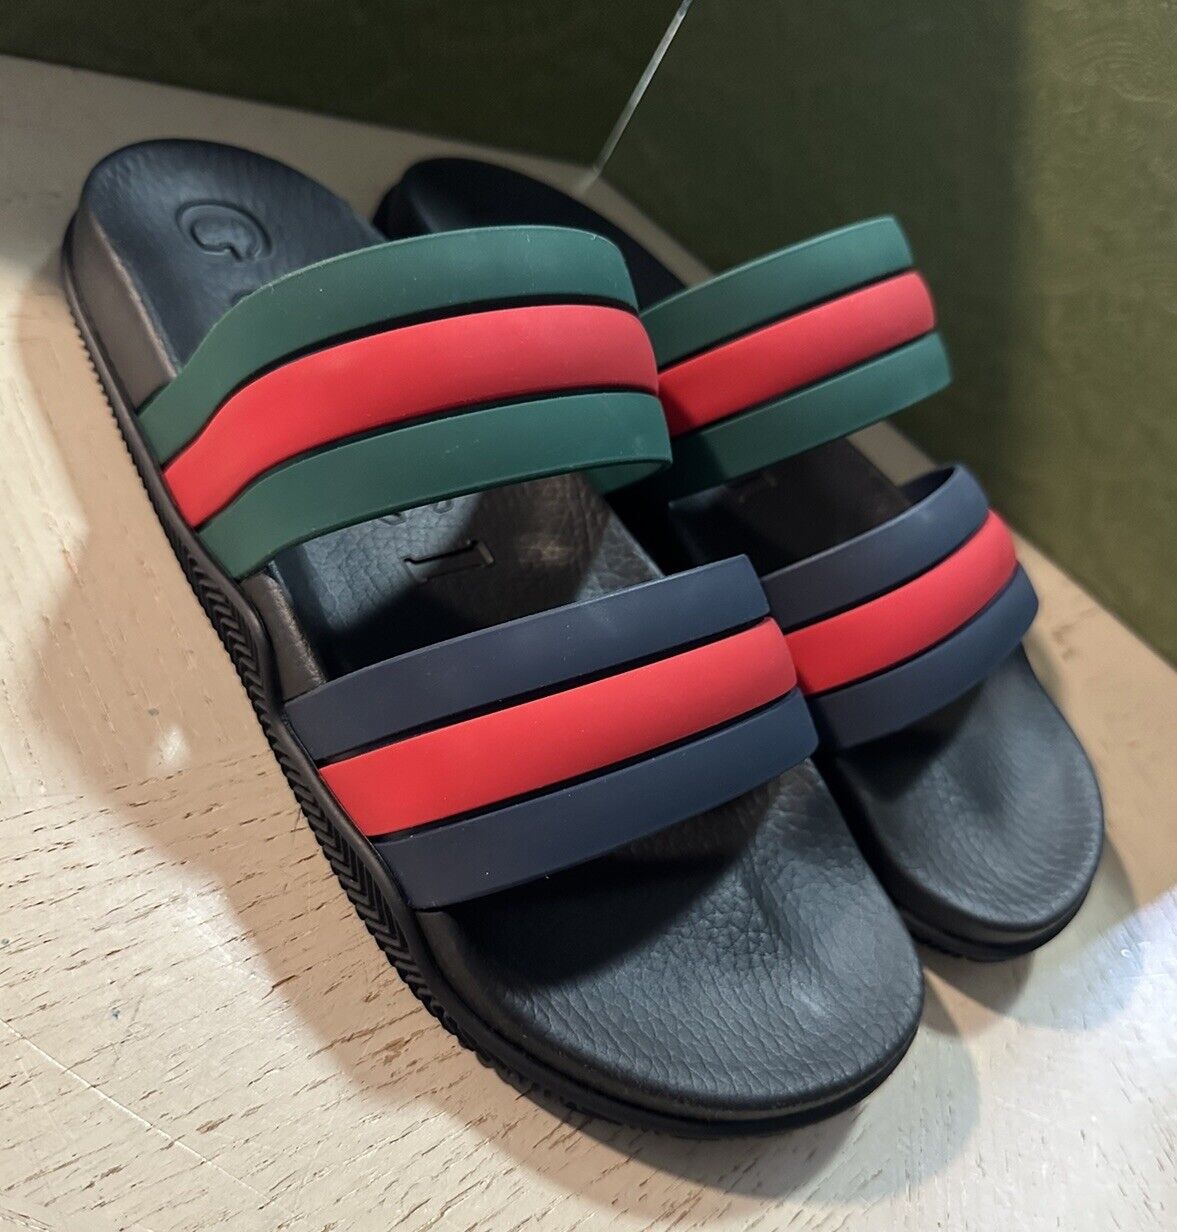 NIB Gucci Mens Rubber Sandal Shoes Blue/Red/Green 10 US/9 UK 692381